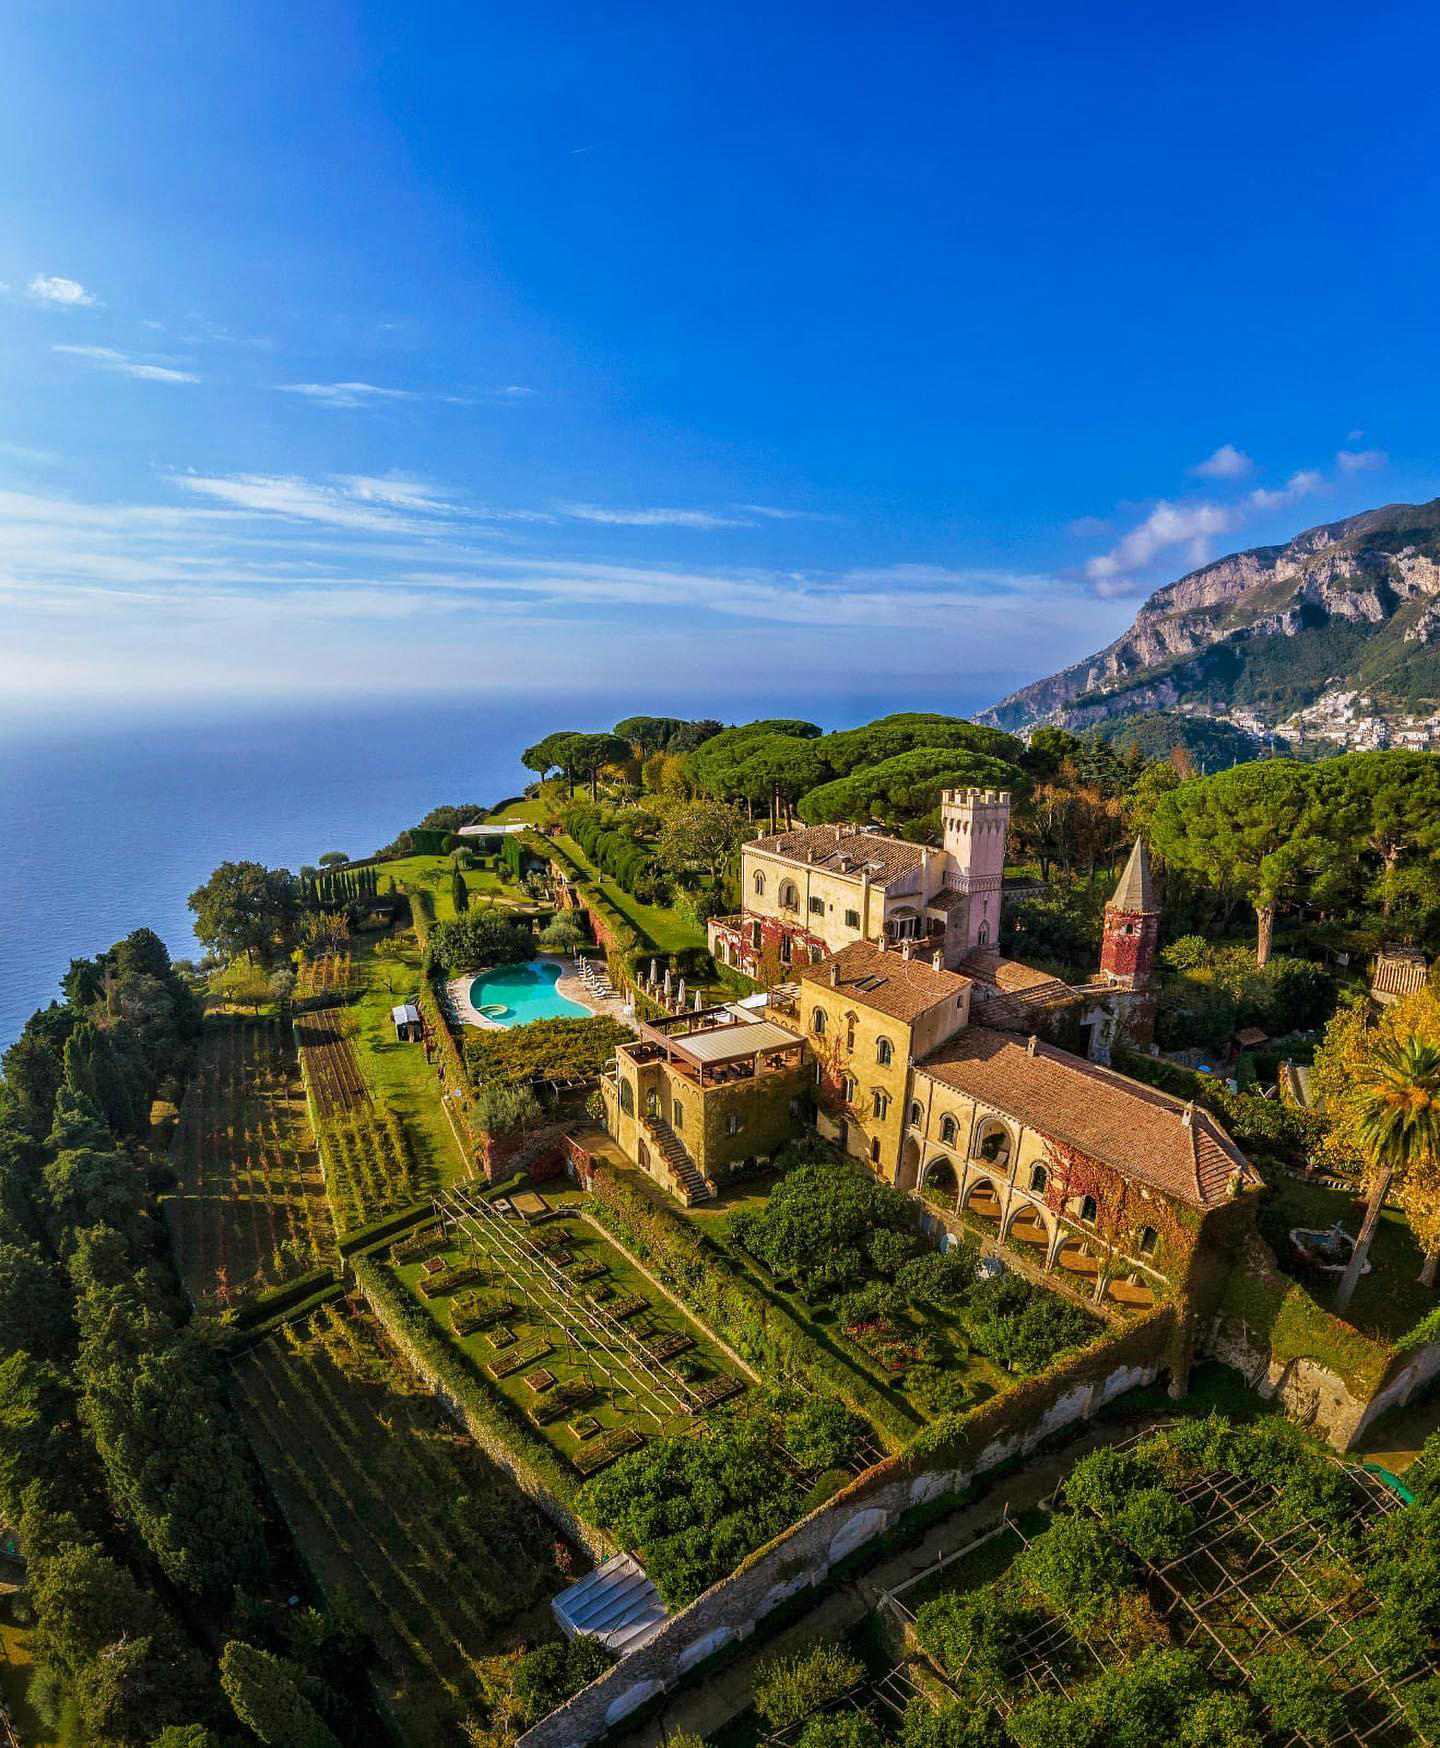 image  1 Villa Cimbrone - Sometimes fairytales become reality #villacimbrone #ravello #amalficoast